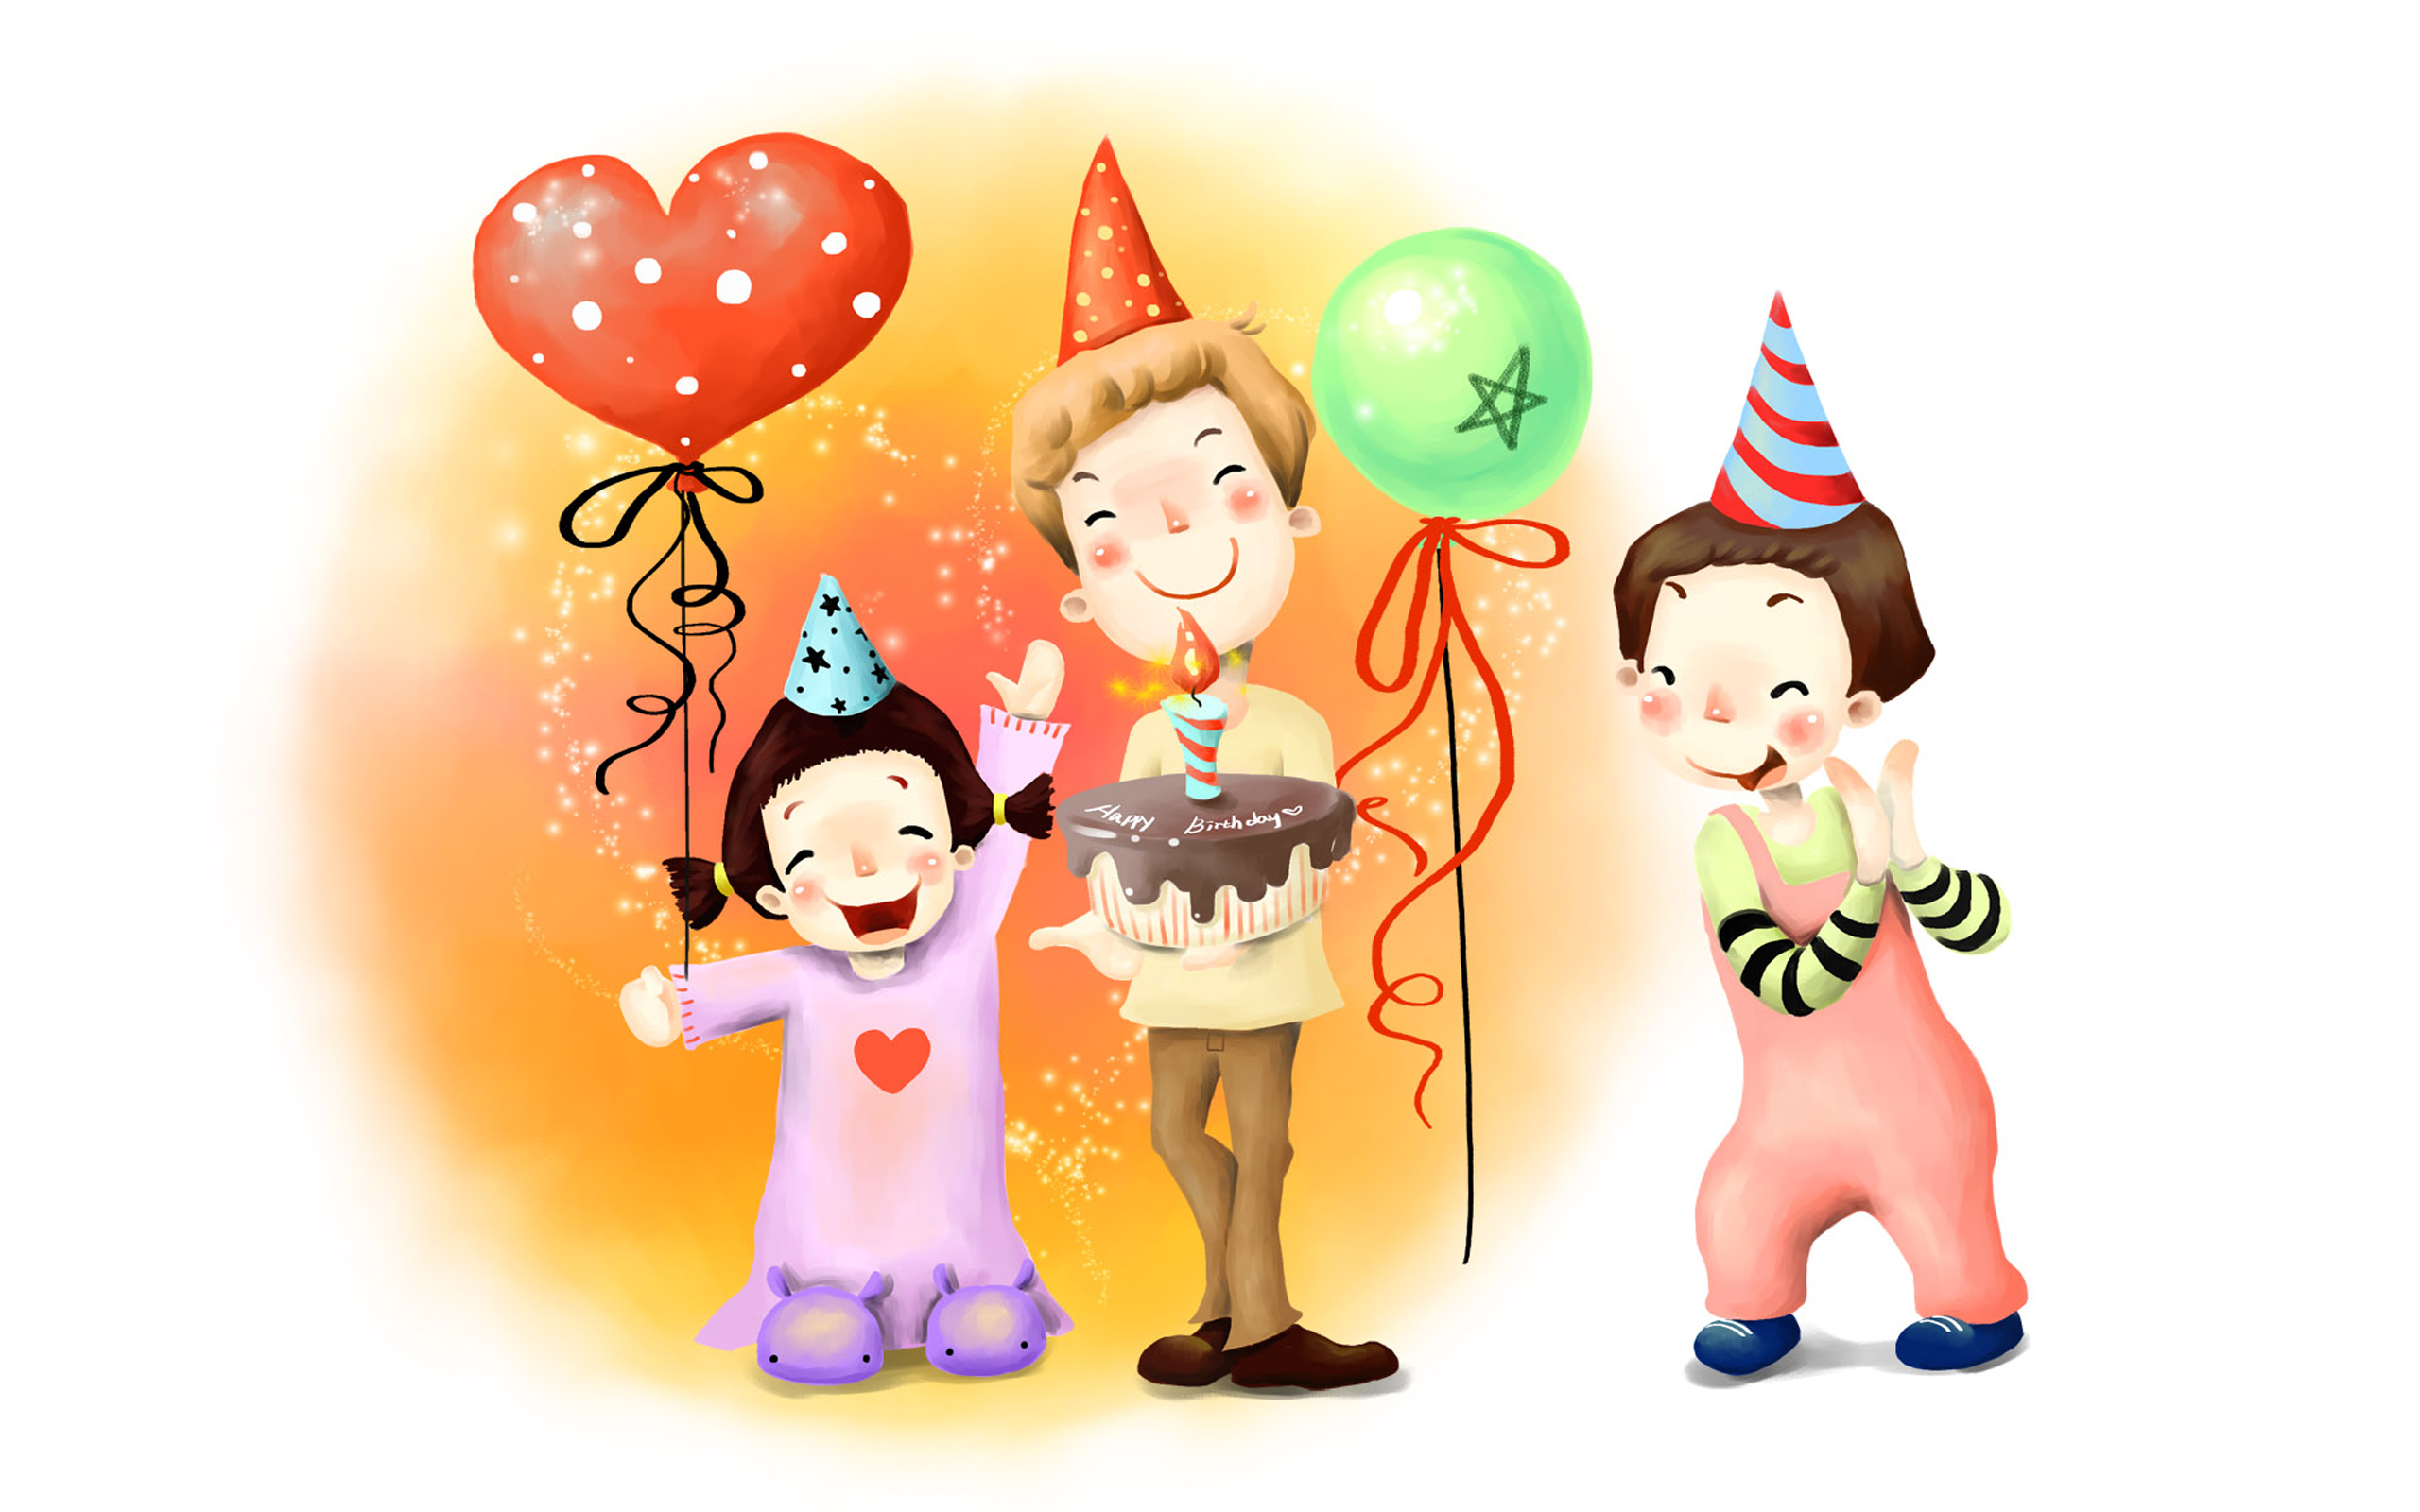 Free Happy Birthday Cartoon Images, Download Free Happy Birthday